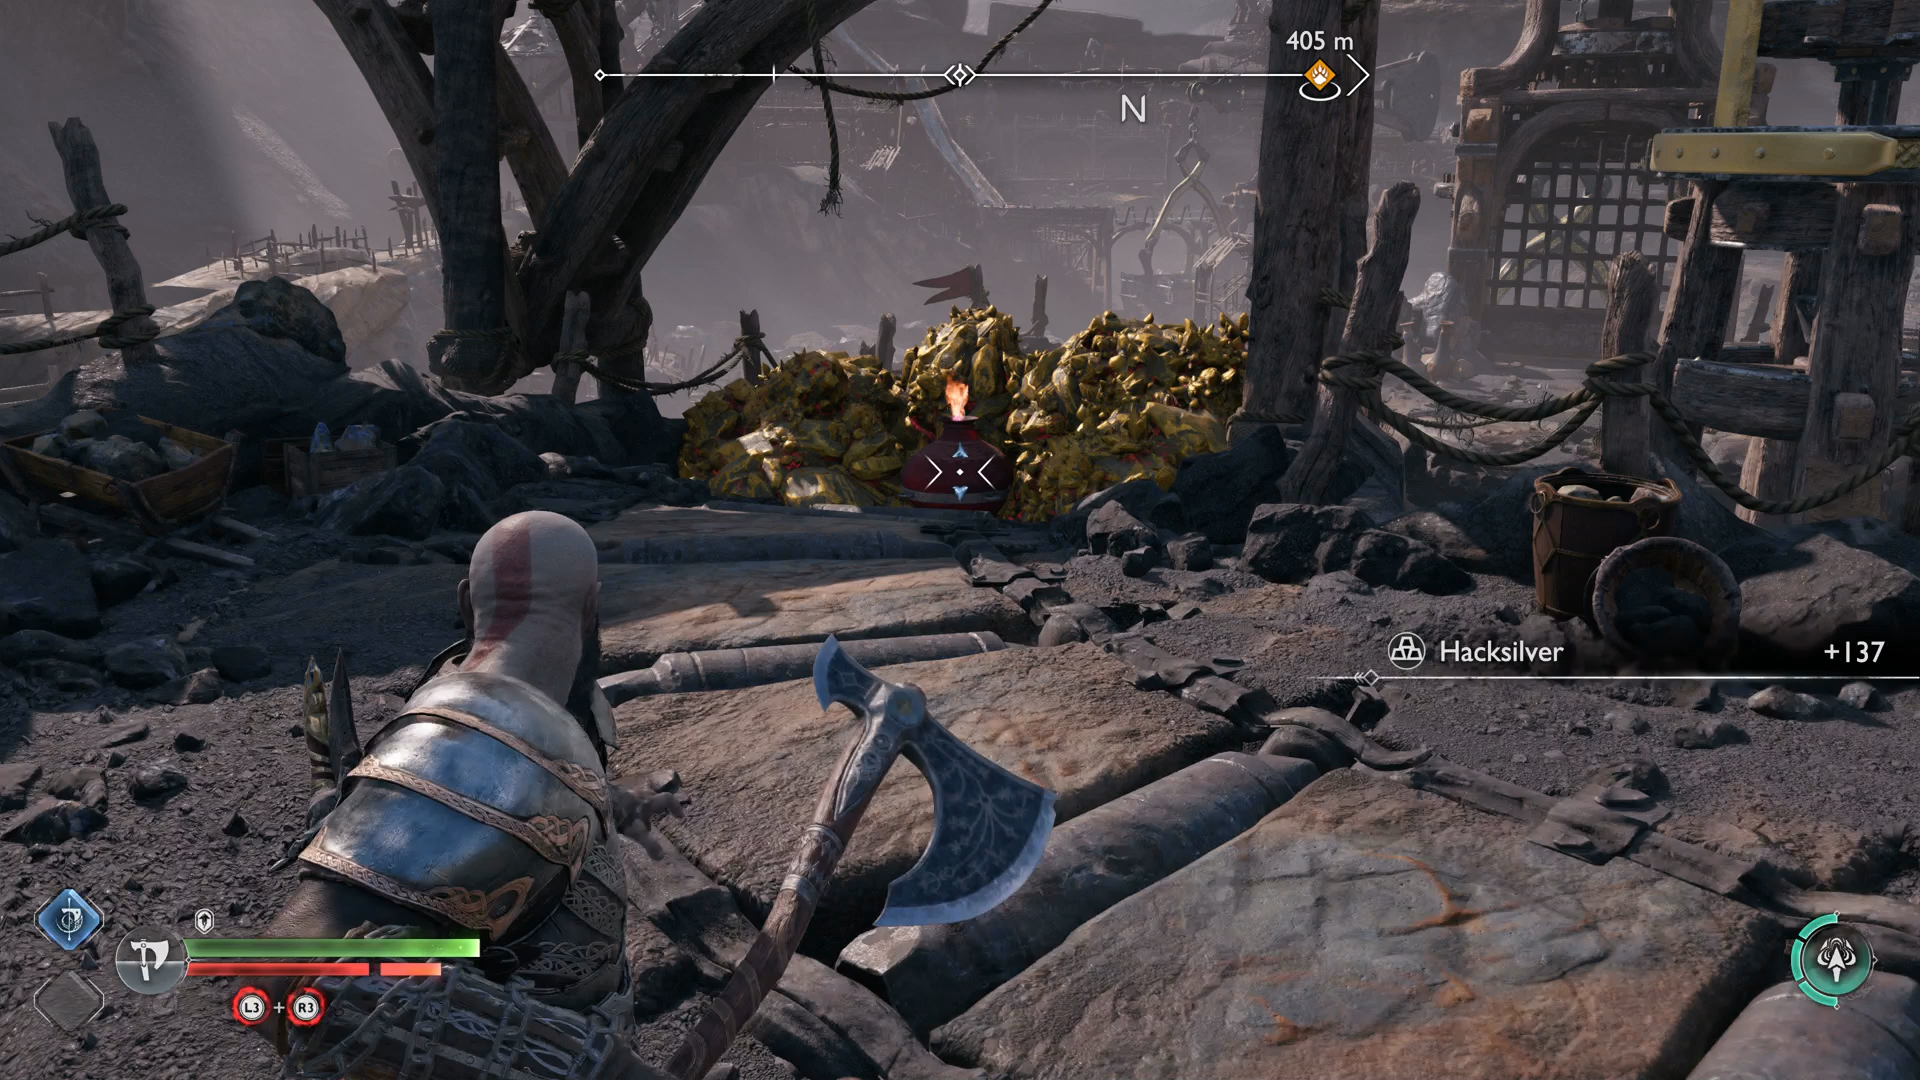 Kratos destroying some rocks with a flaming pot in God of War Ragnarok